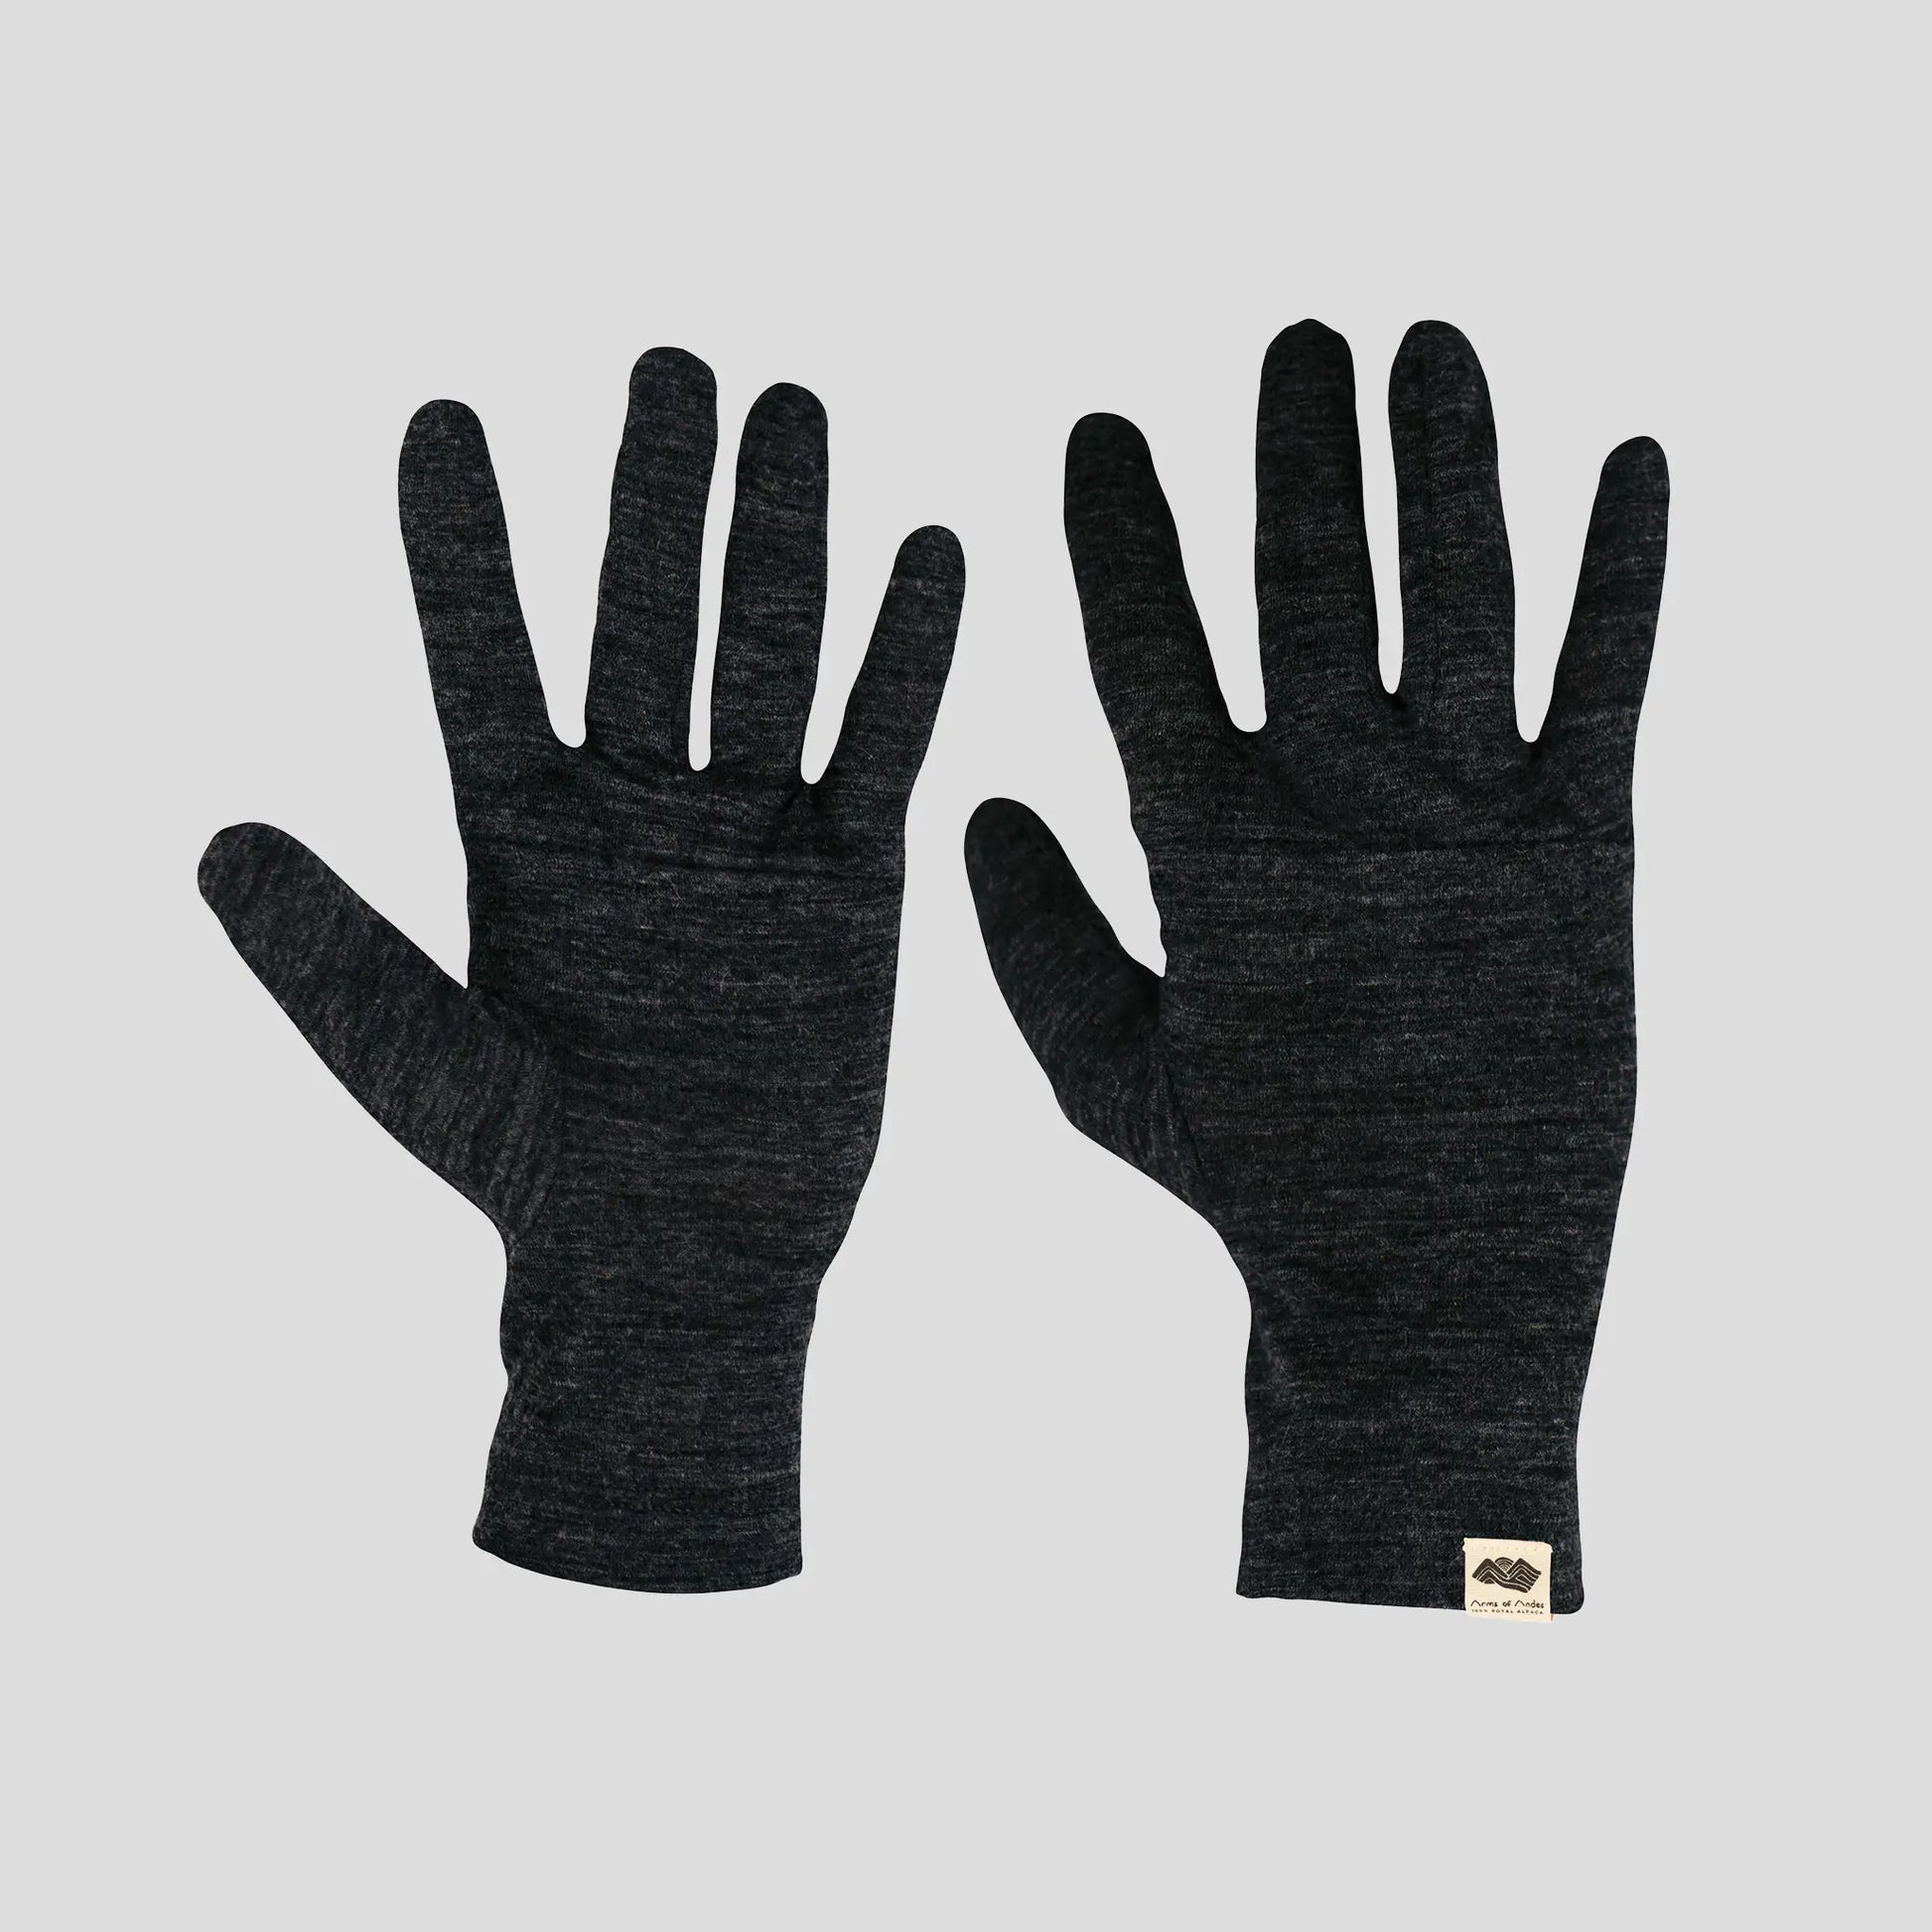 Evolution Knitwear Wool Knit Fingerless Gloves for Men - Made in The USA - Super Soft Merino Wool